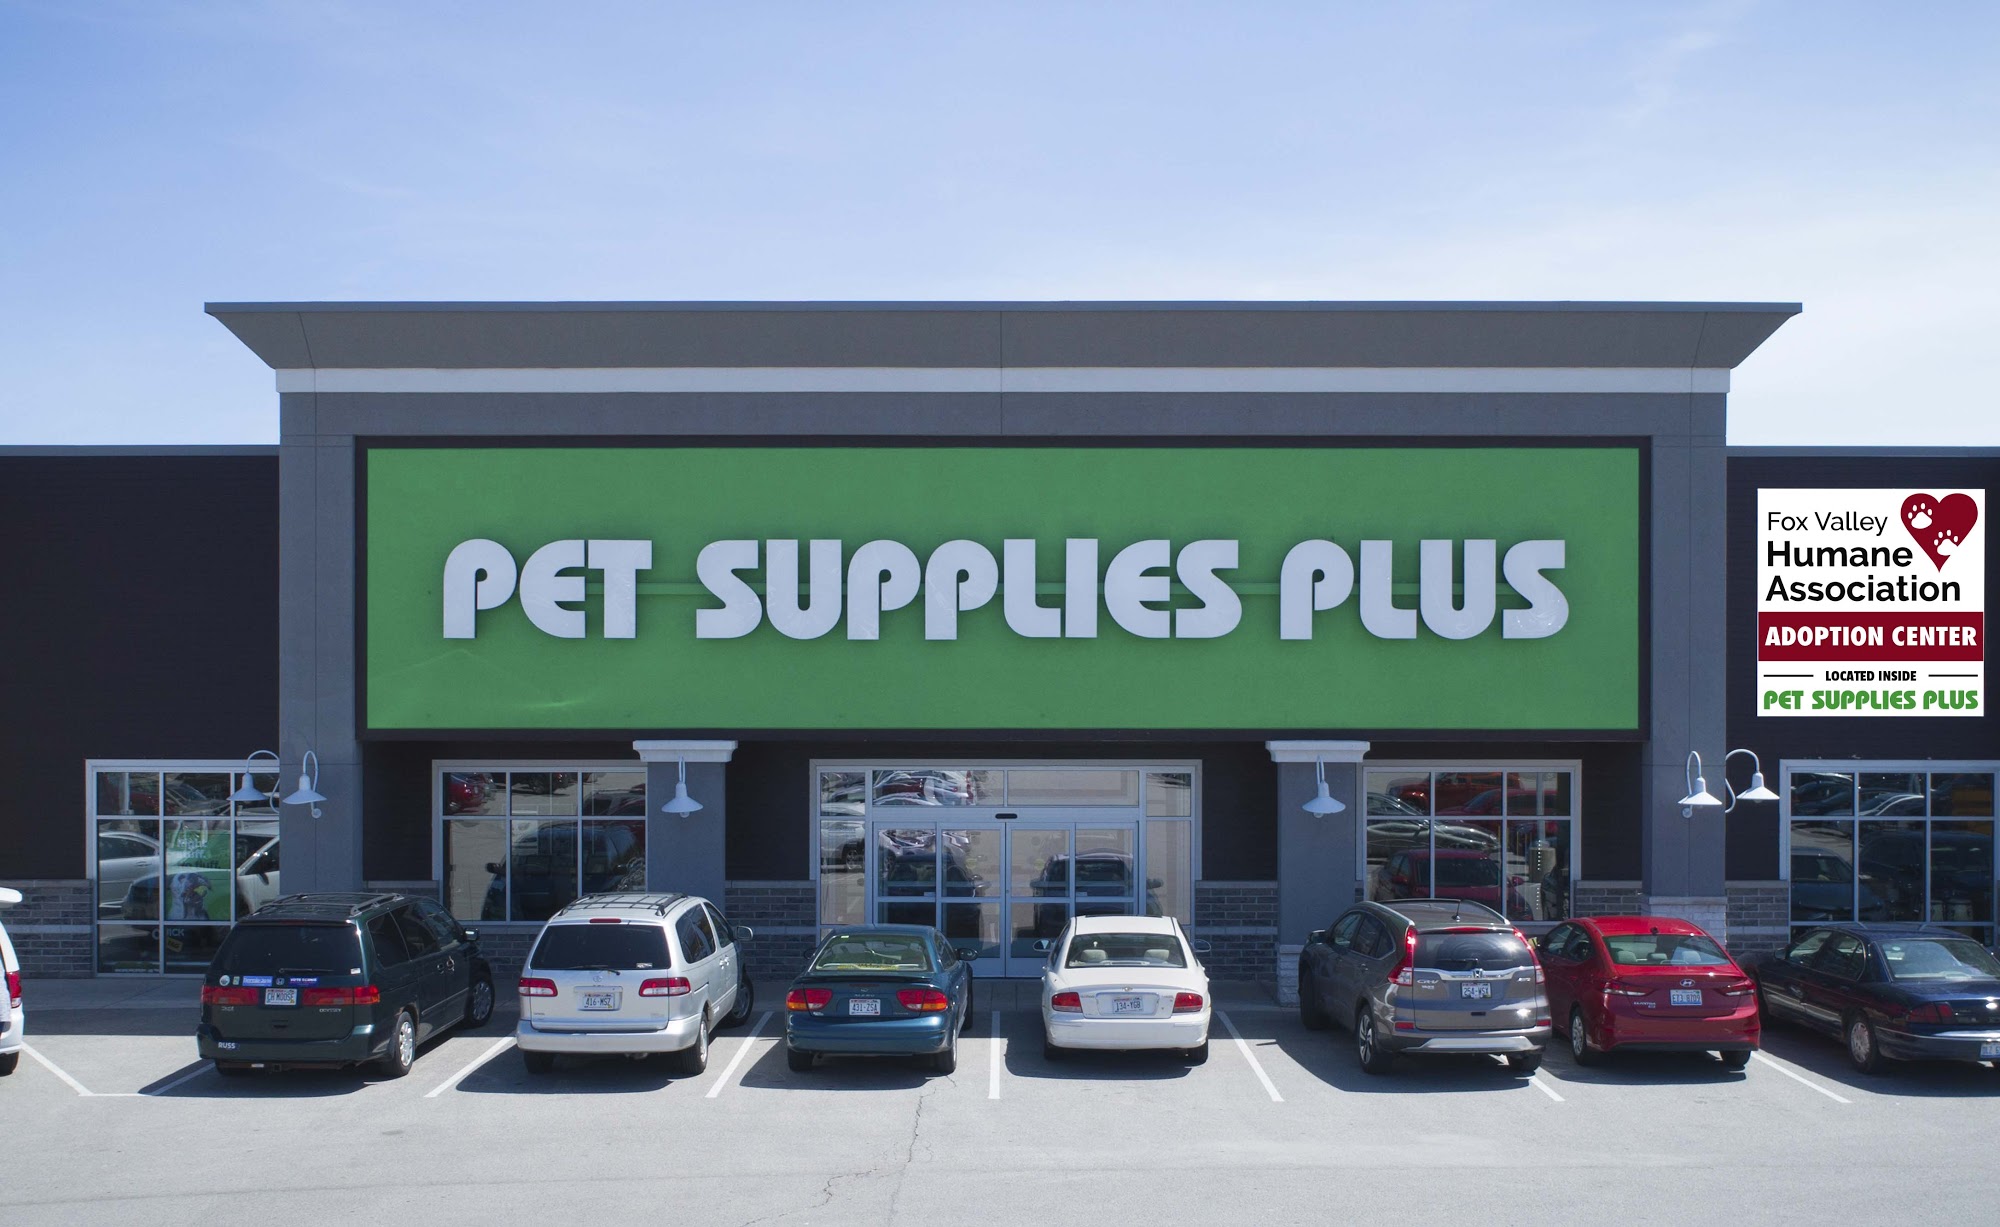 Pet Supplies Plus Green Bay